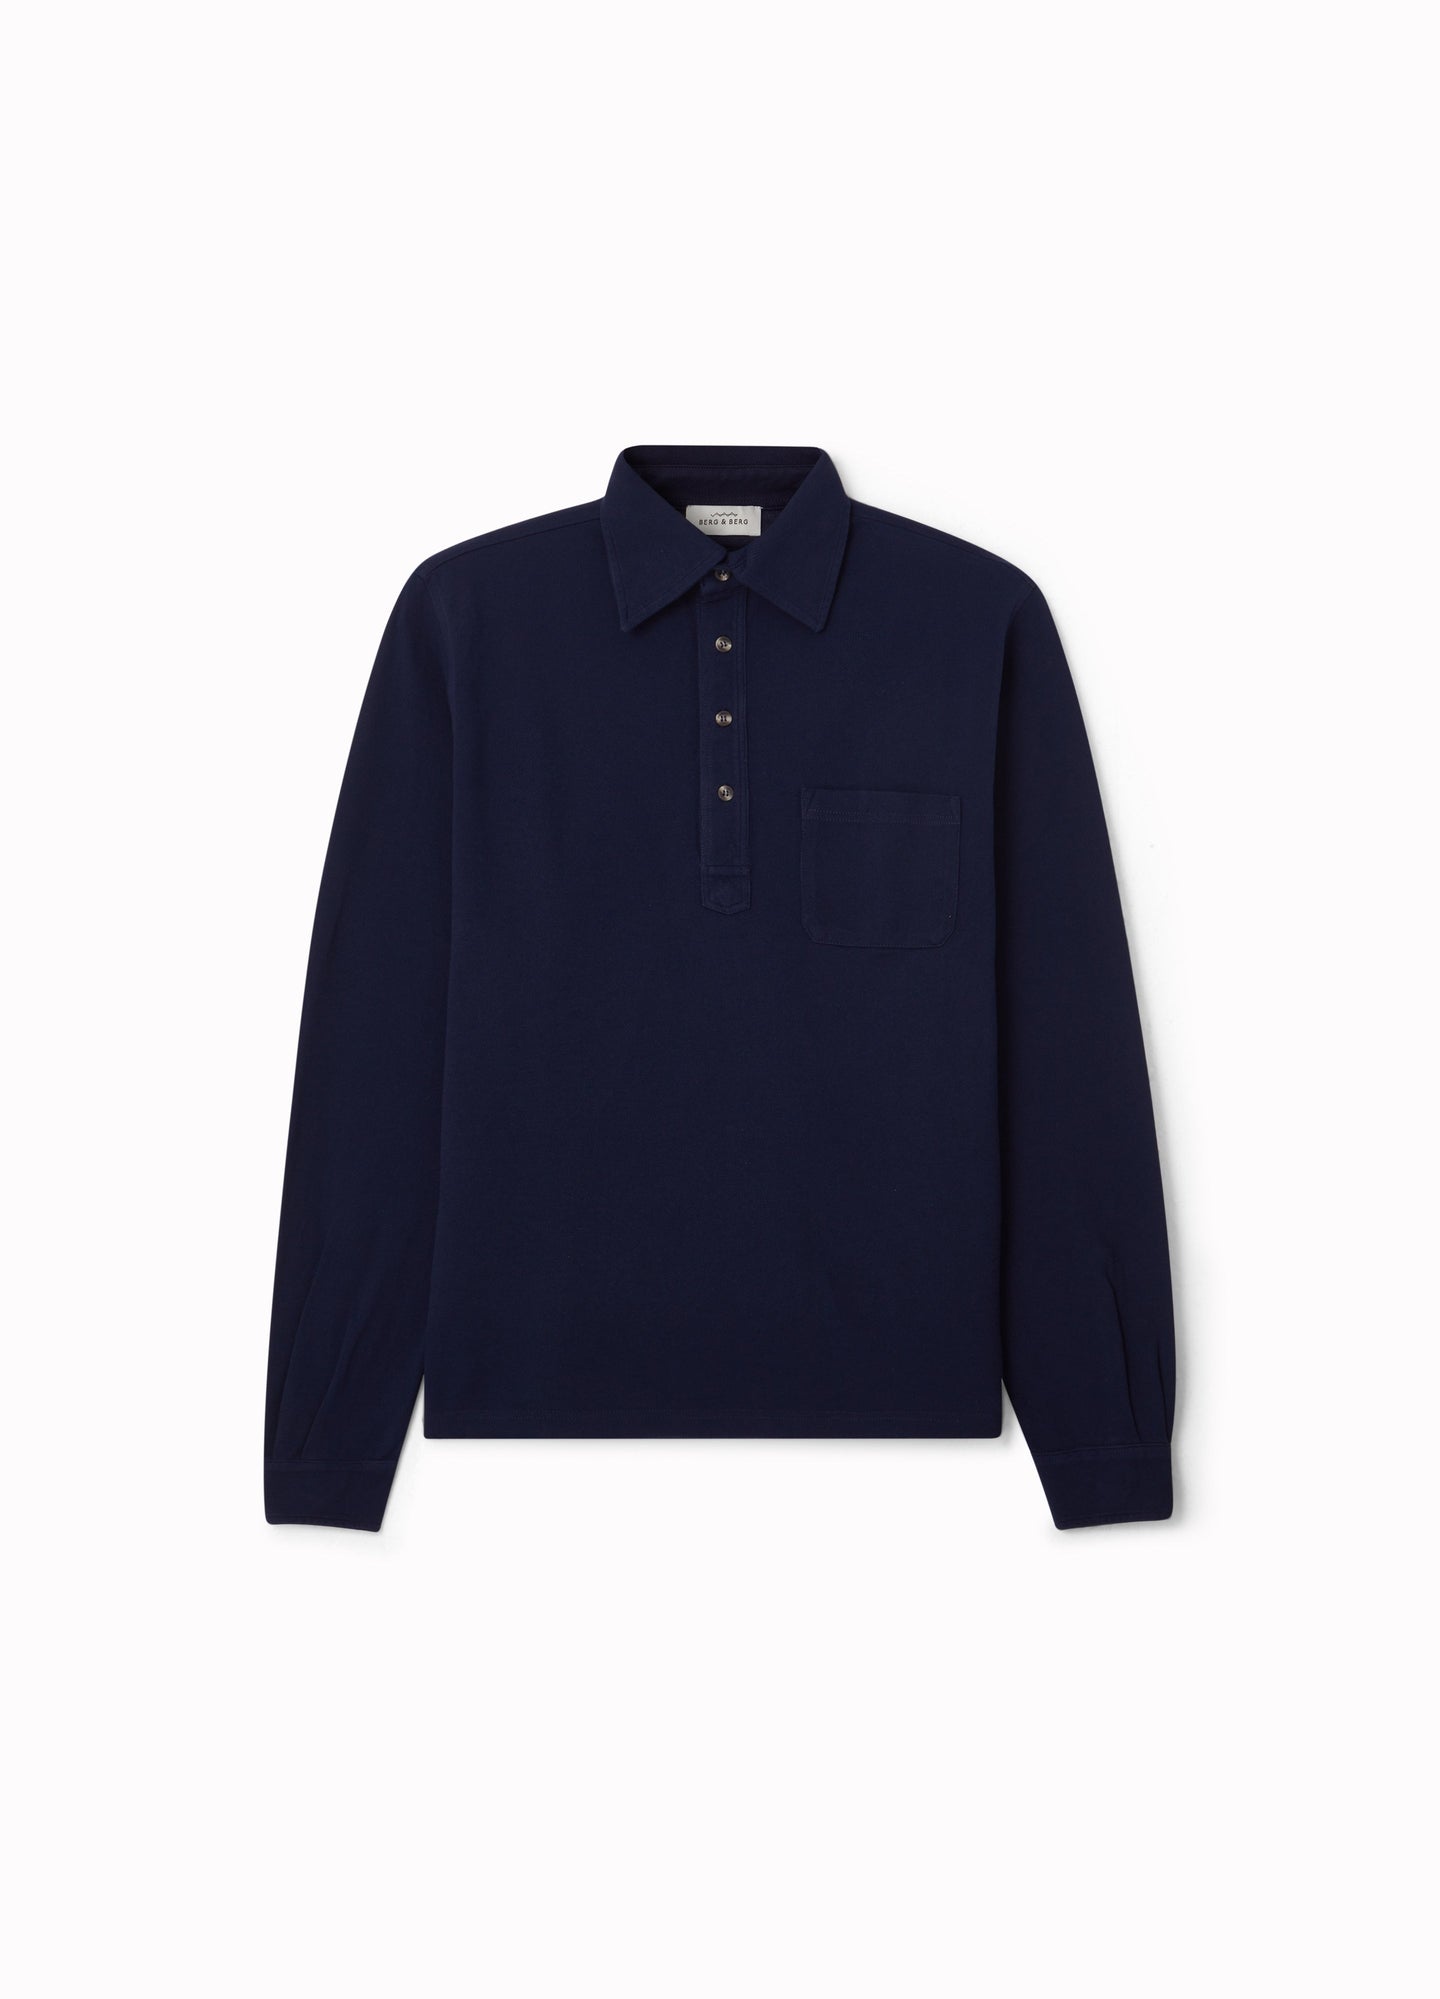 Ted Long Sleeve Polo Shirt - Navy Berg & Berg